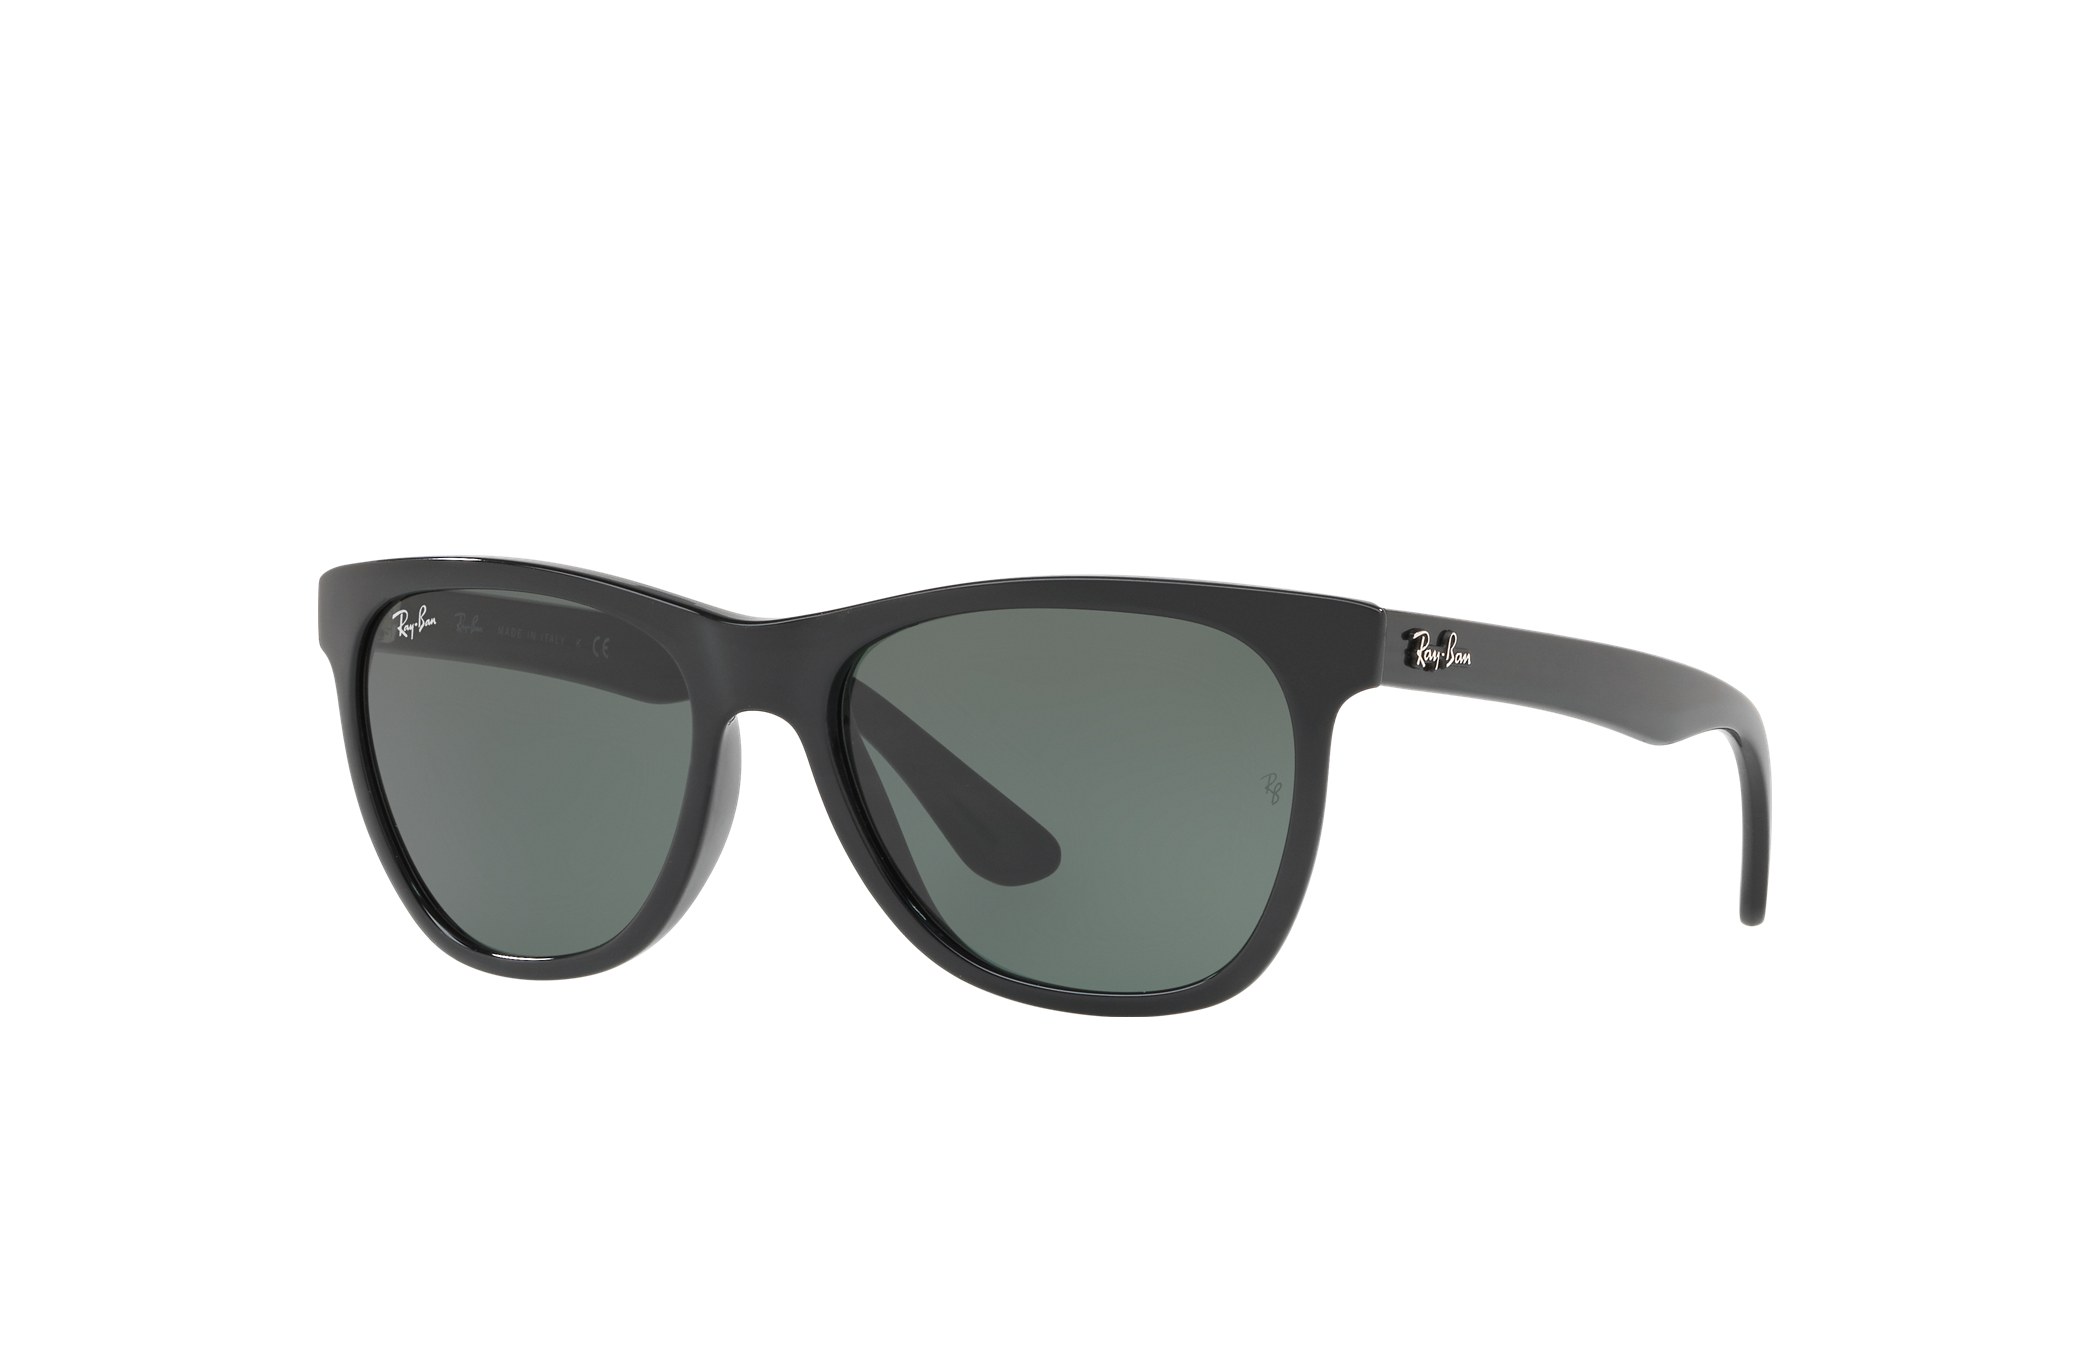 Middelen nakoming Gedeeltelijk Rb4184 Sunglasses in Black and Green | Ray-Ban®